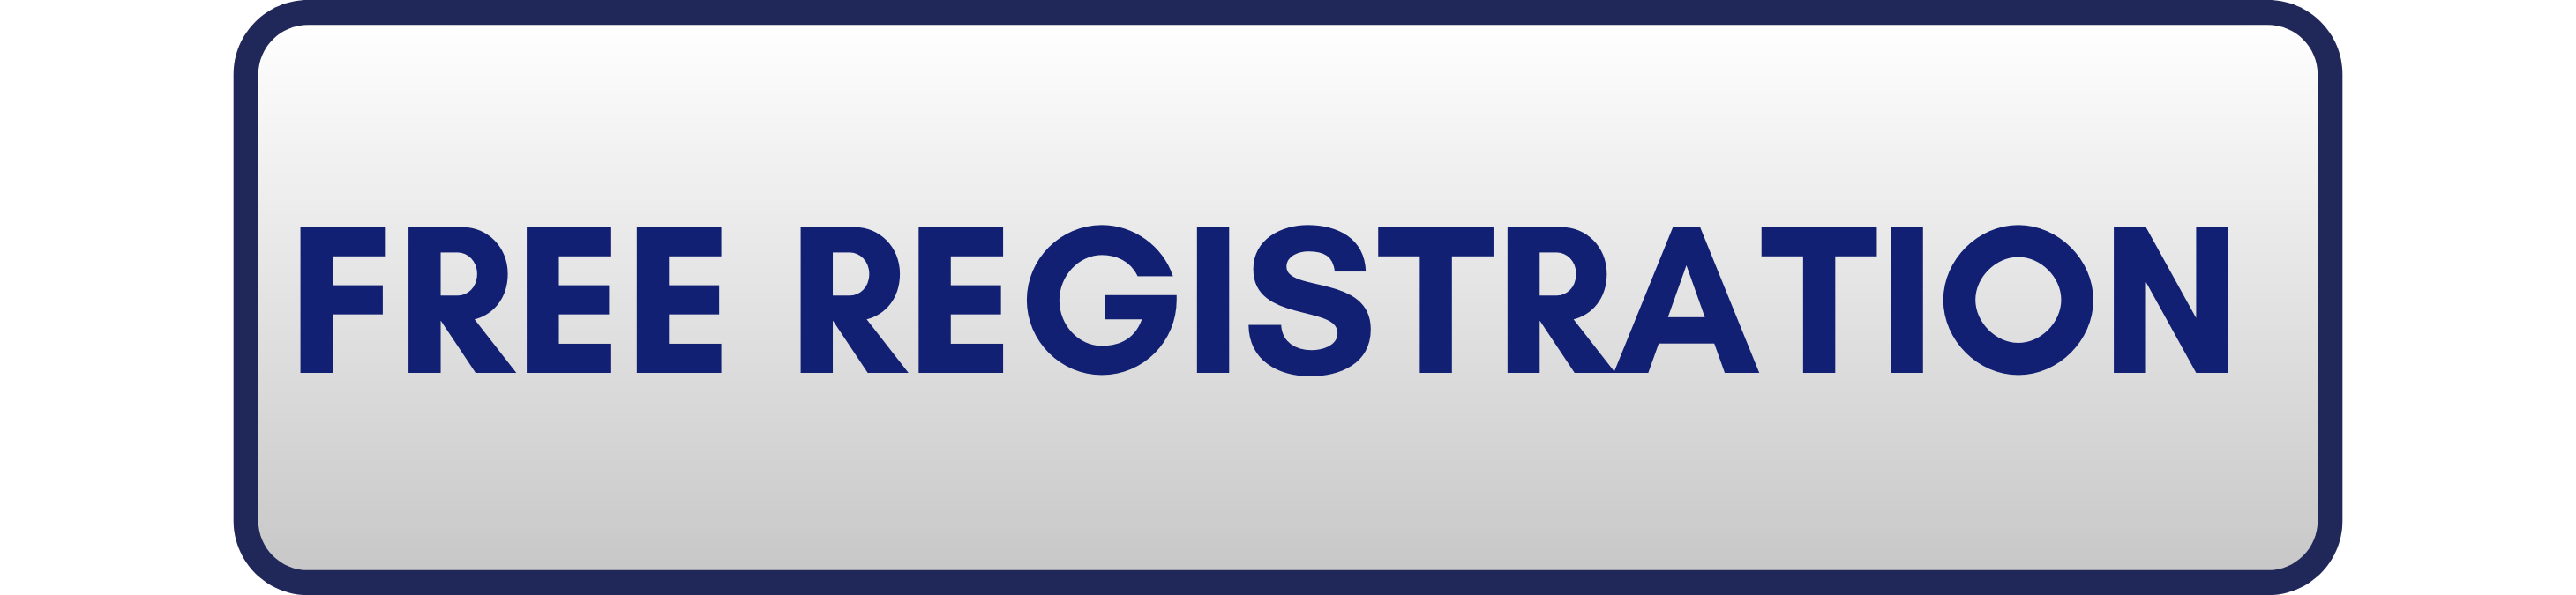 Trademarking 101 - Free Registration